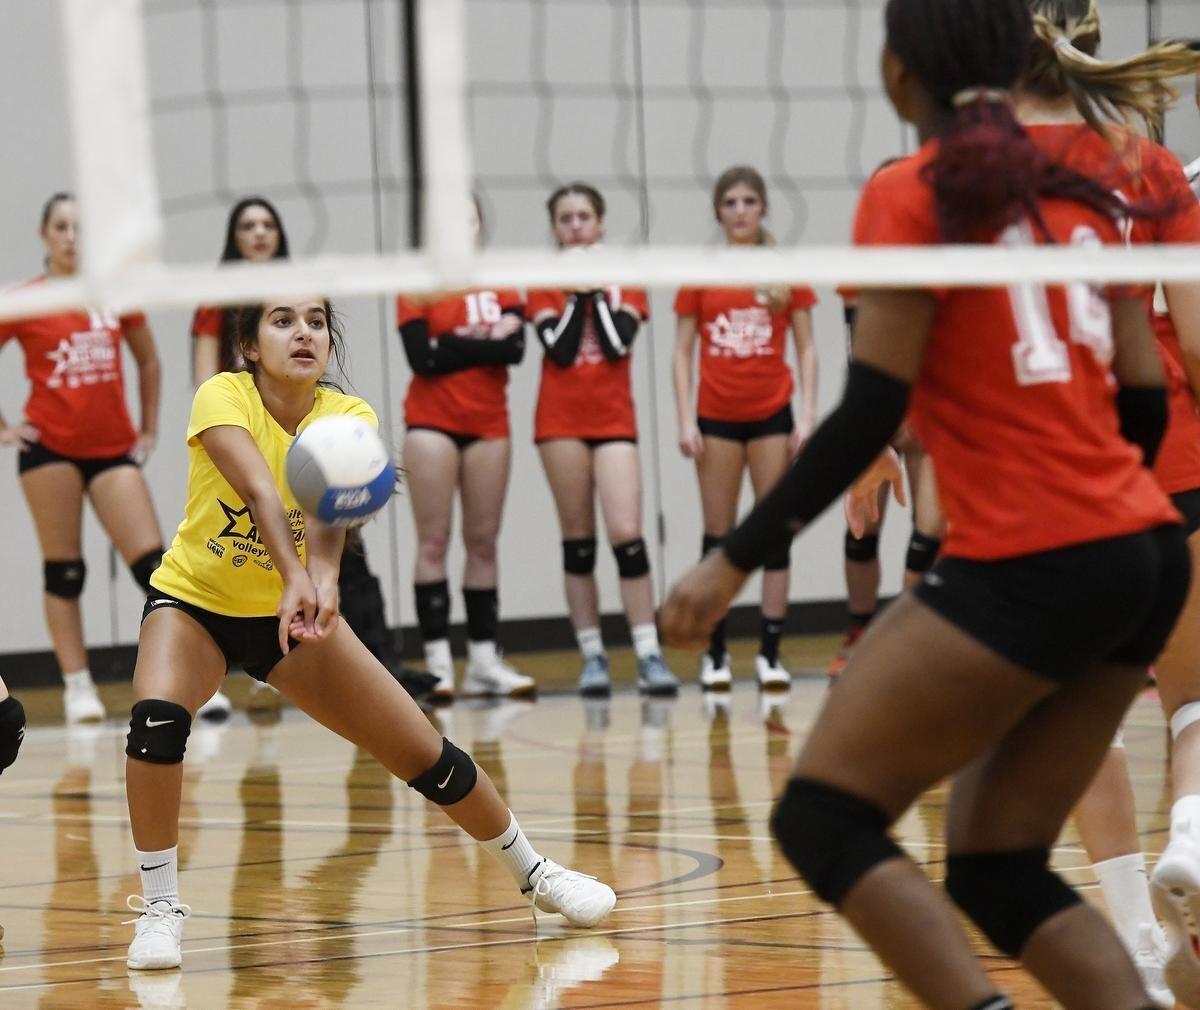 High school sport in photos: Girls volleyball all-stars